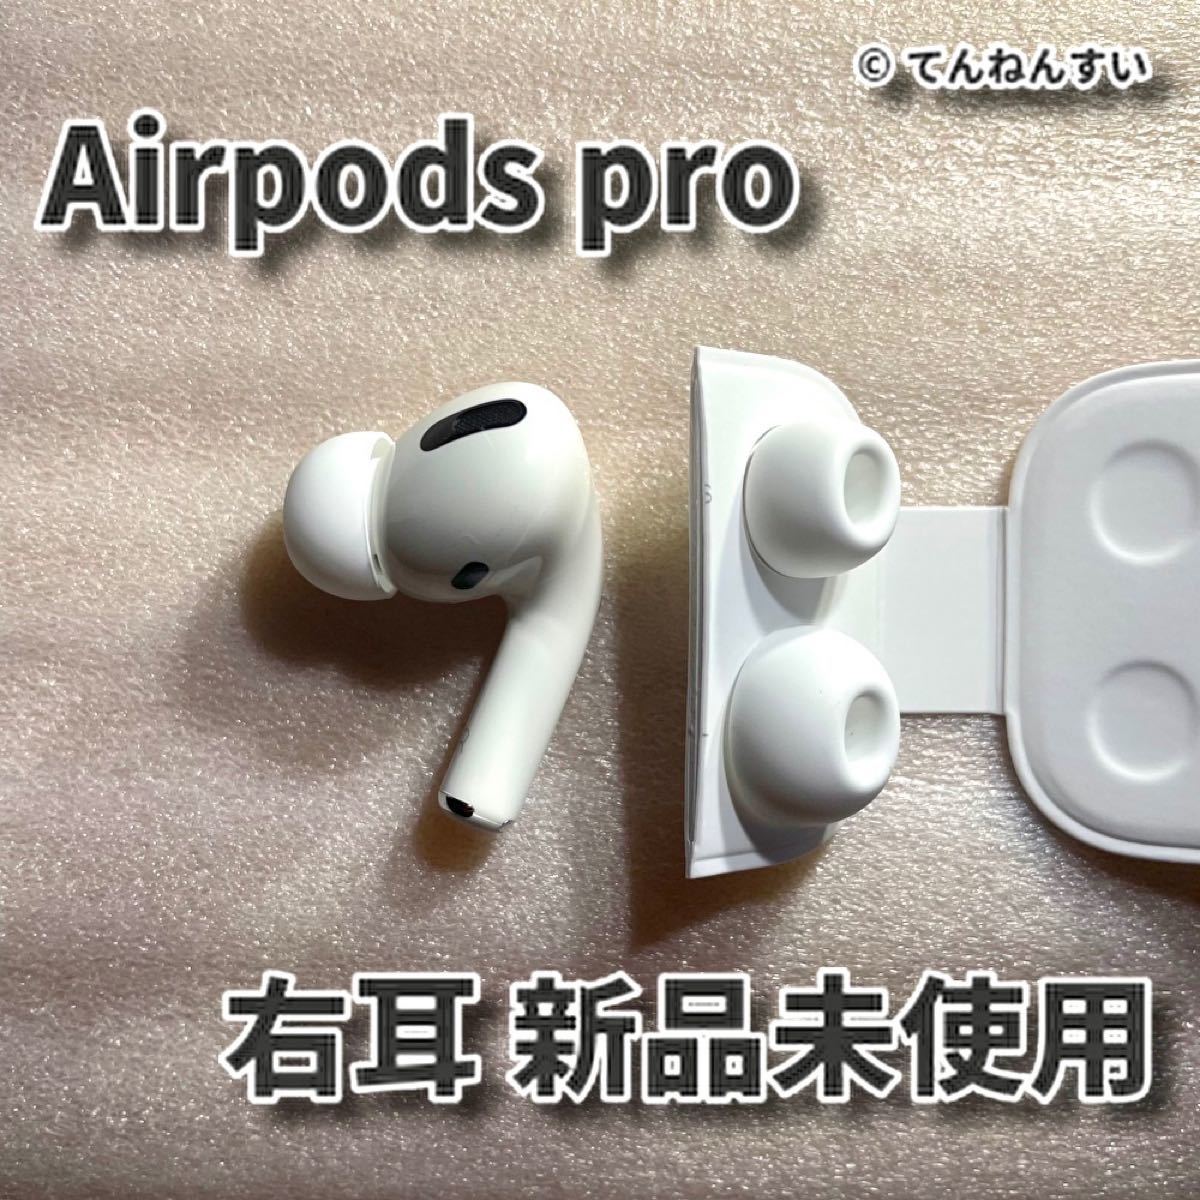 Apple AirPods Pro イヤホン 左耳のみ片耳